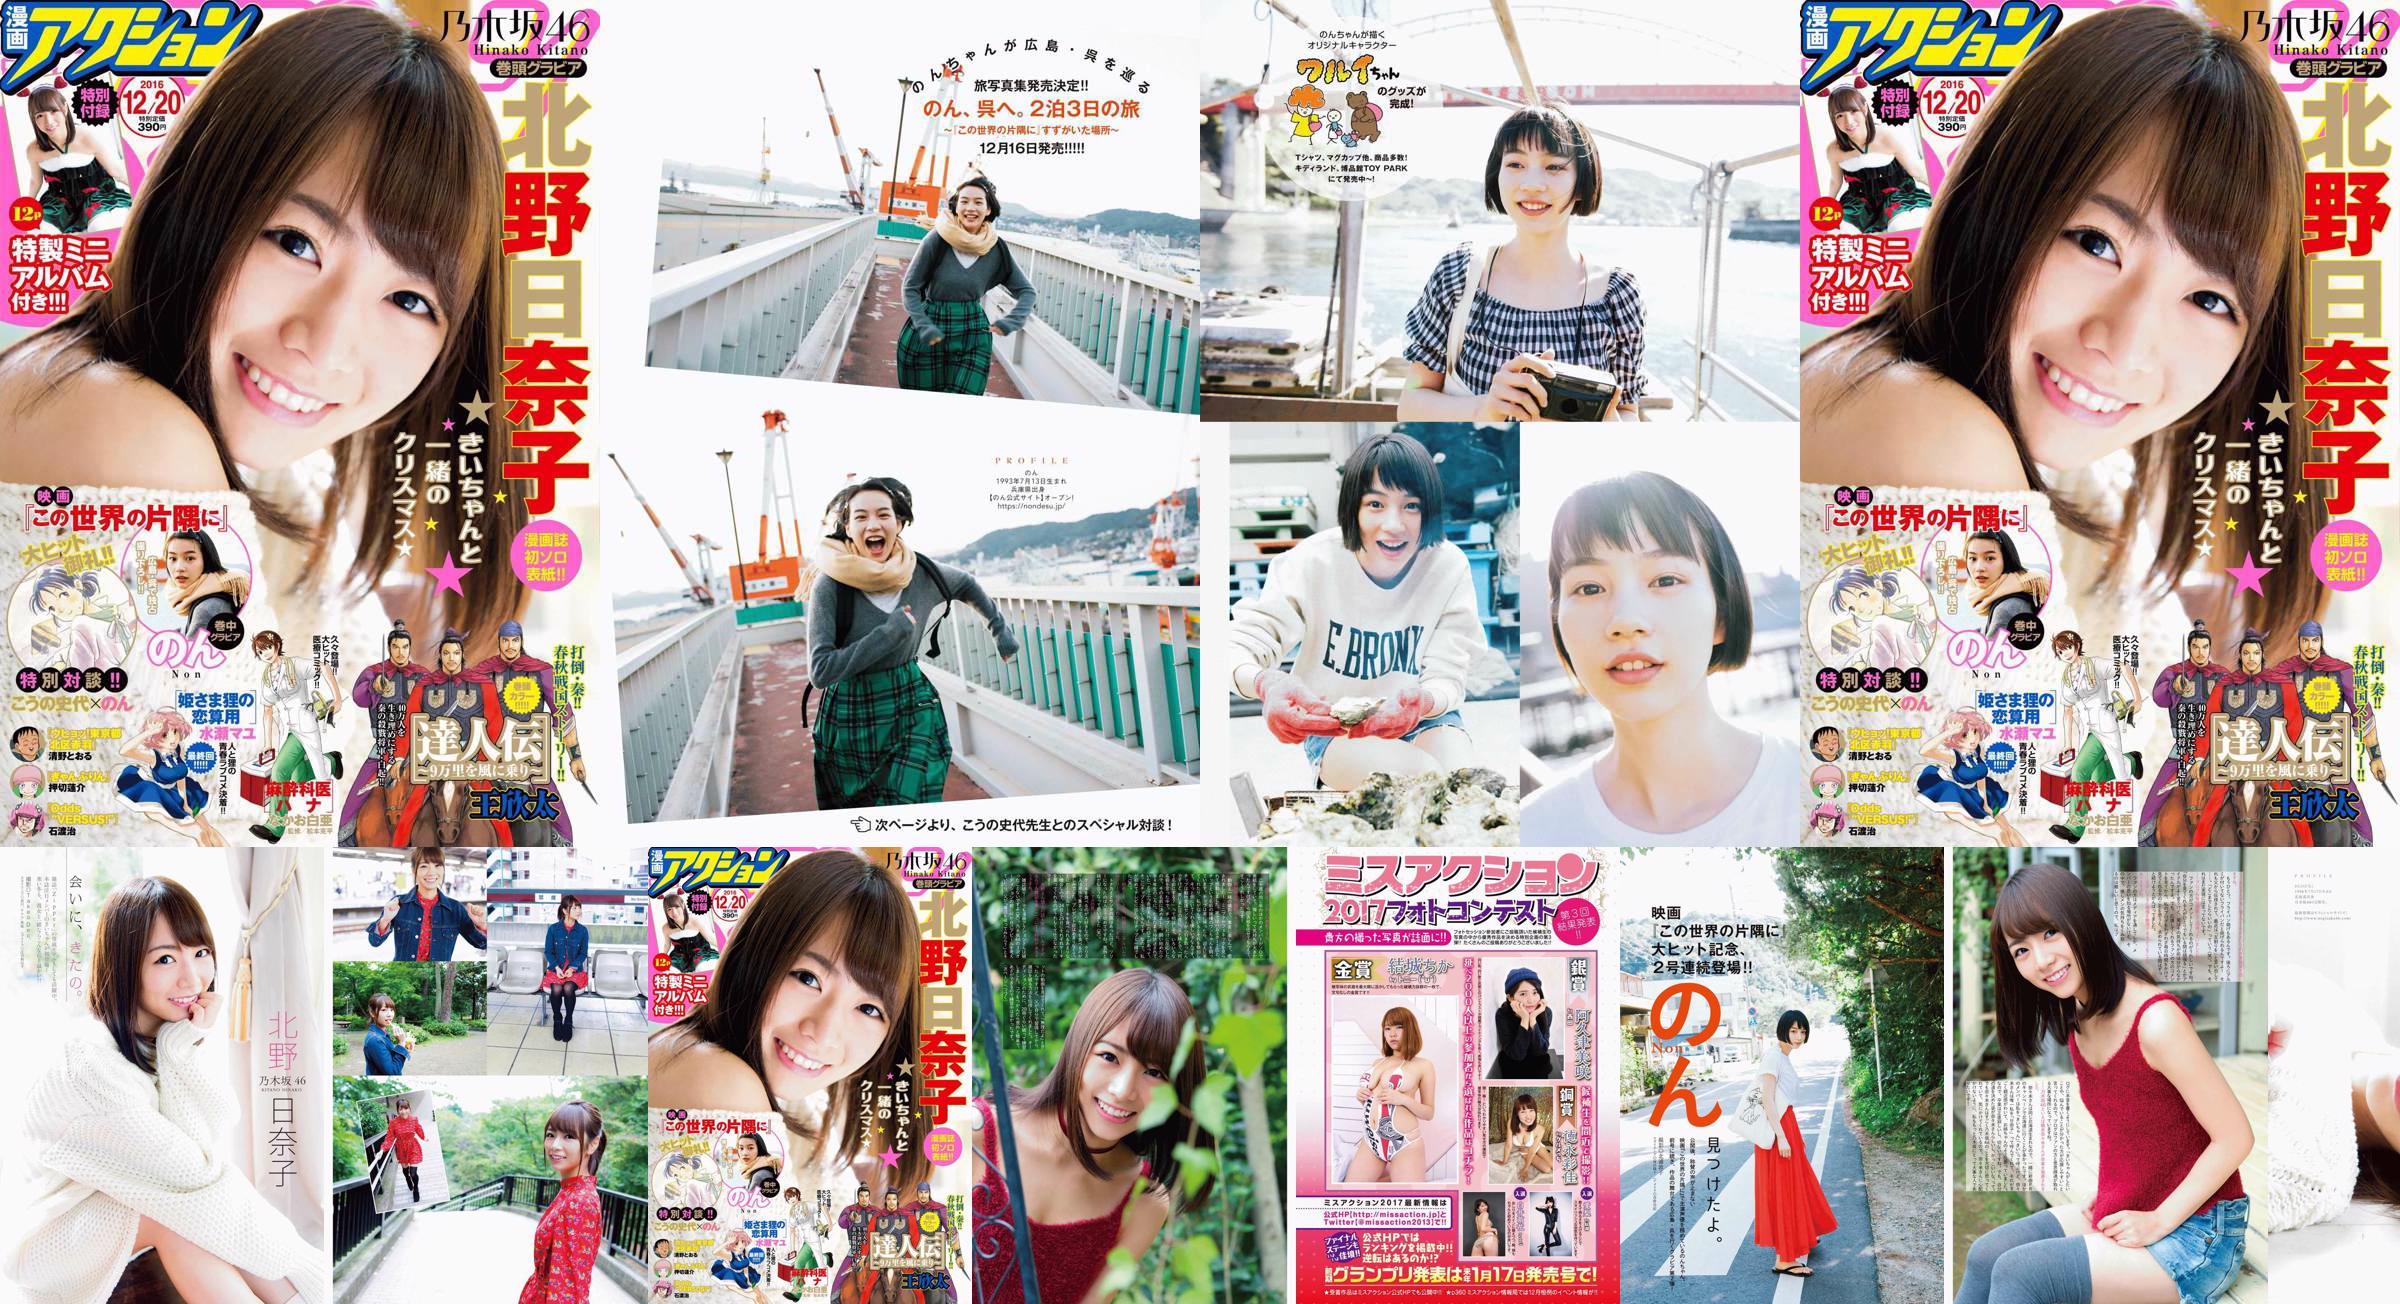 [Manga Action] Kitano Hinako のん 2016 No.24 Photo Magazine No.9be7ec Page 1